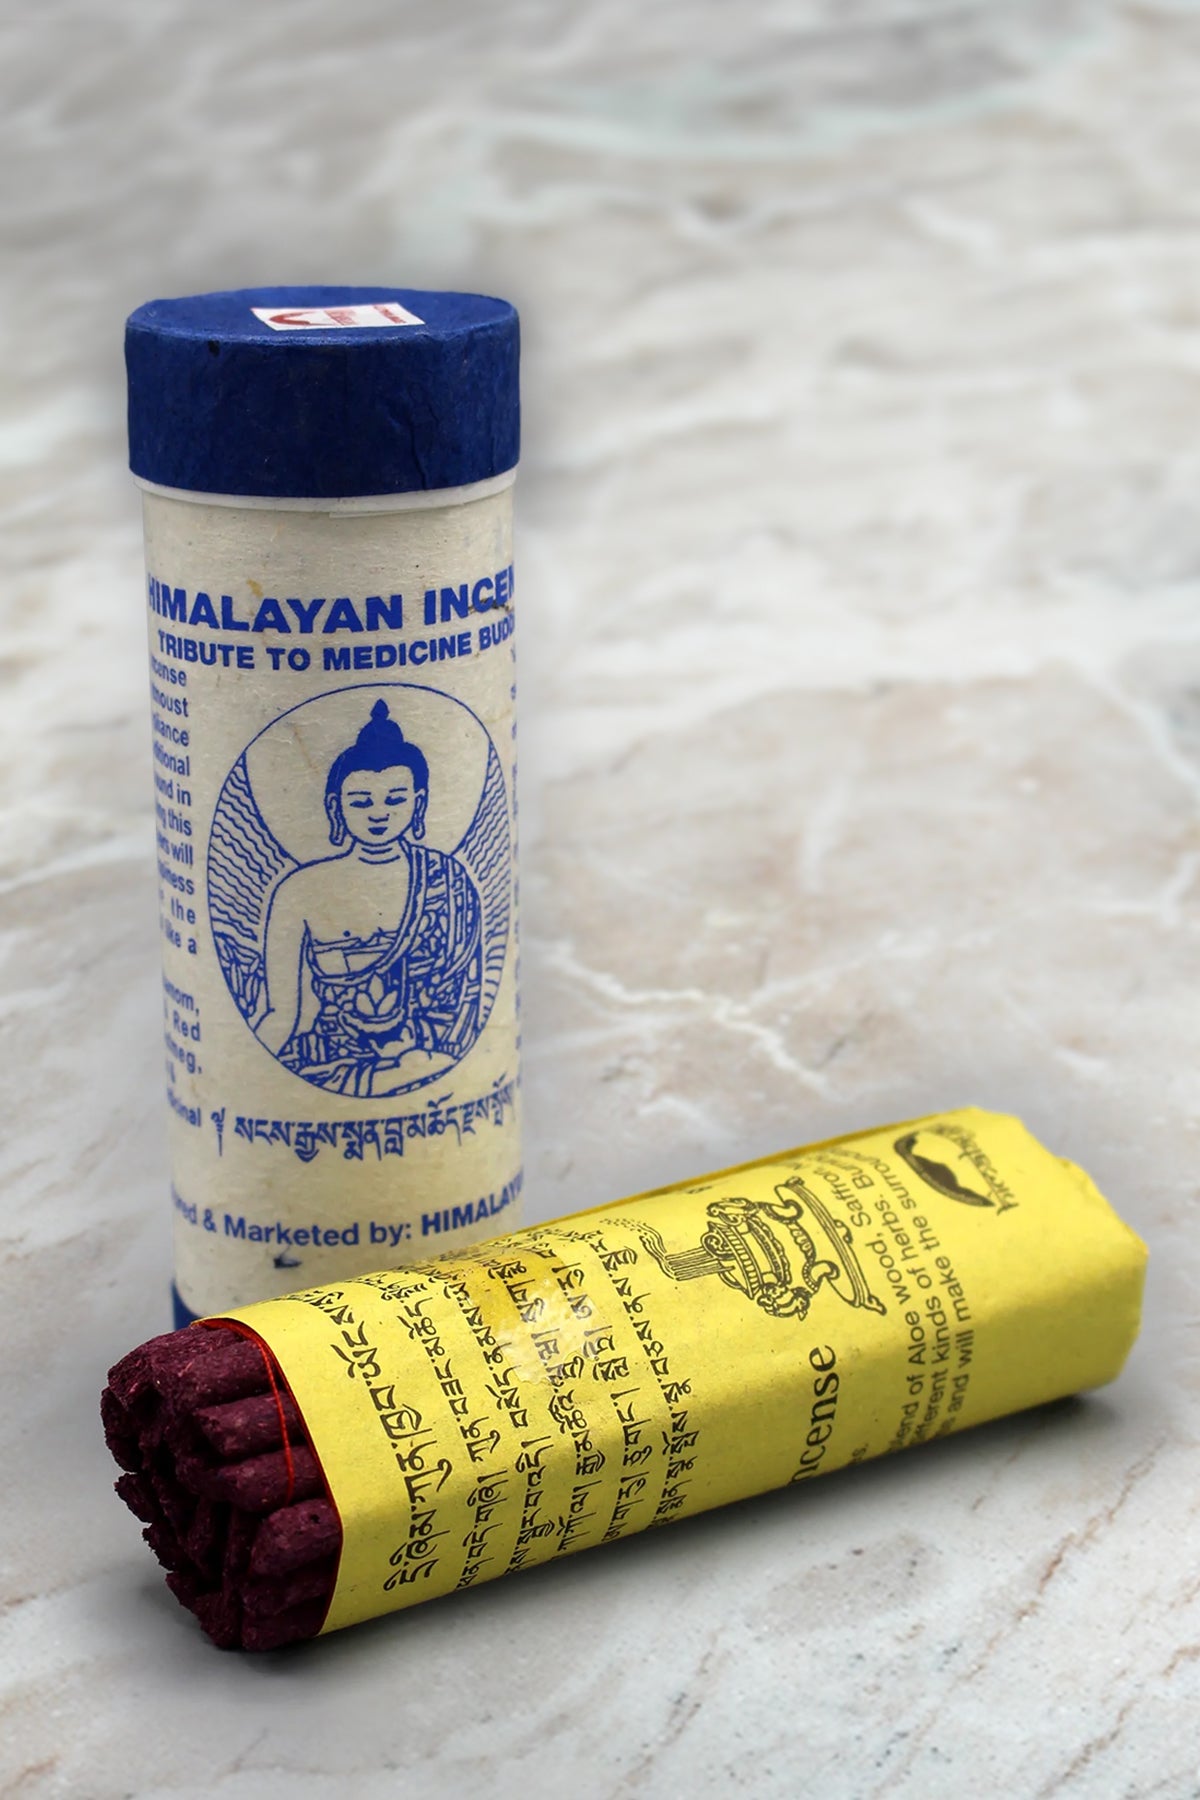 Tribute to Medicine Buddha Himalayan Incense sticks